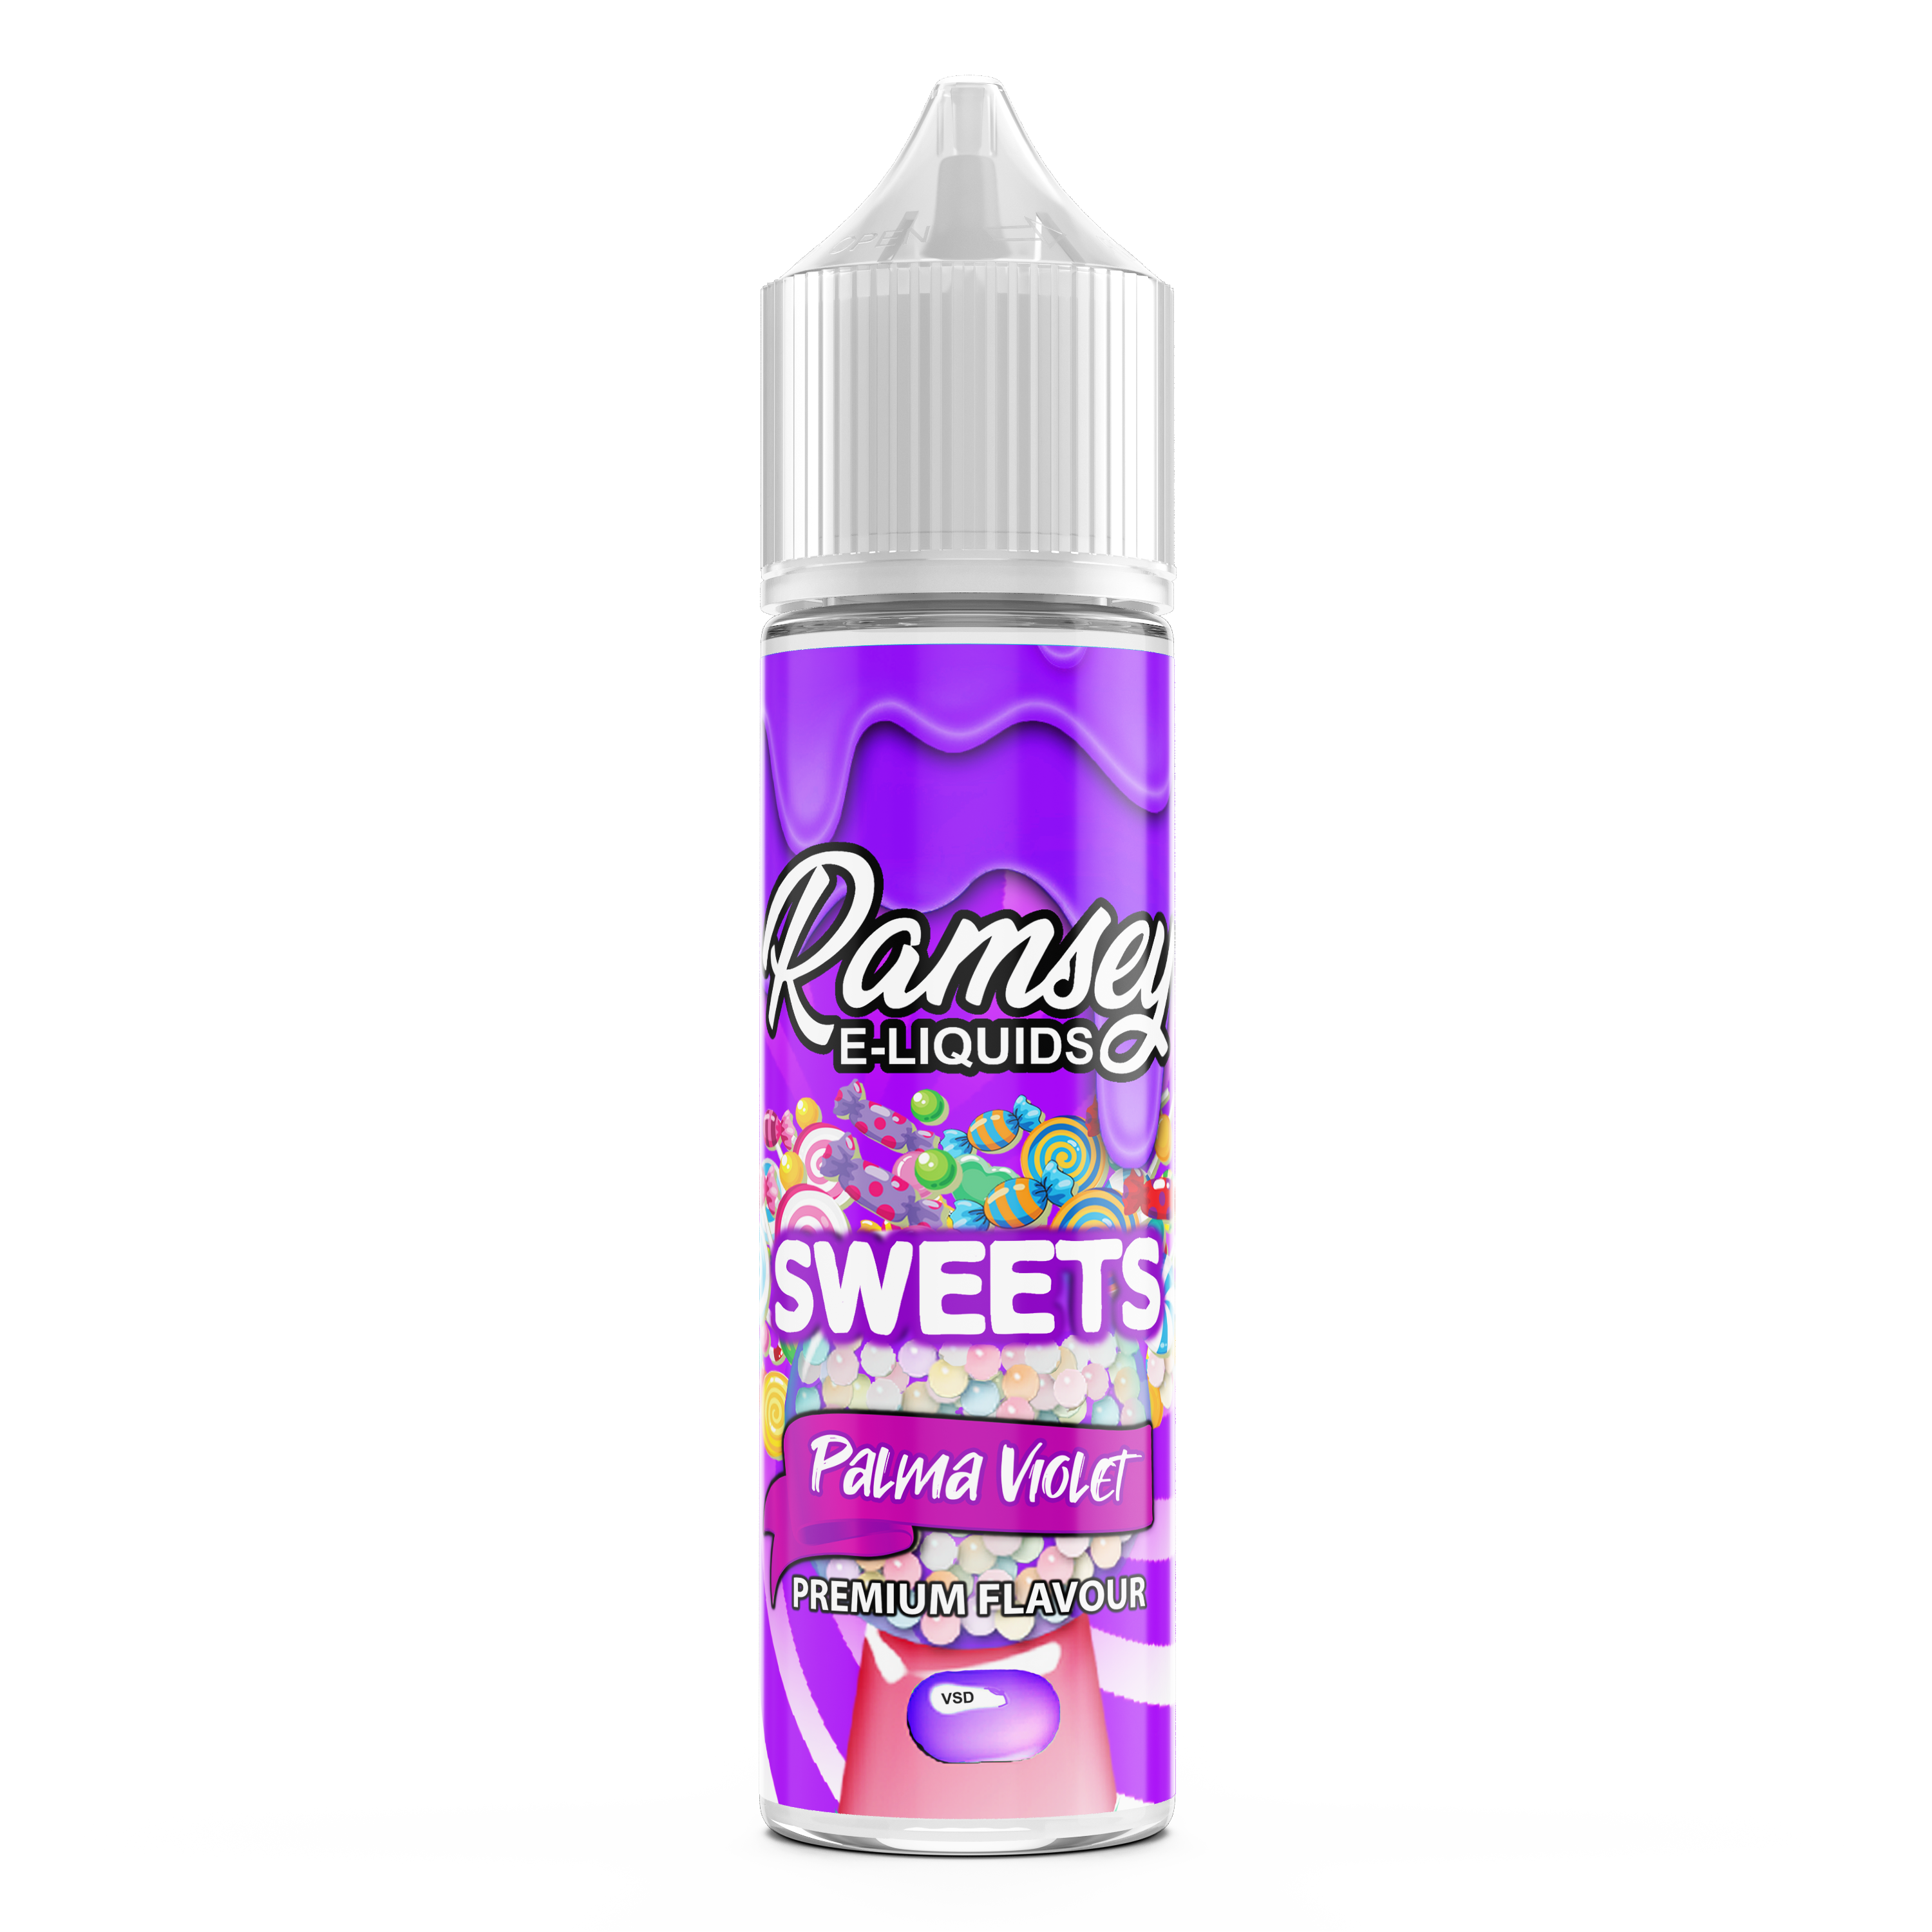 Ramsey E-Liquids Sweets Palma Violets 0mg 50ml Shortfill E-Liquid